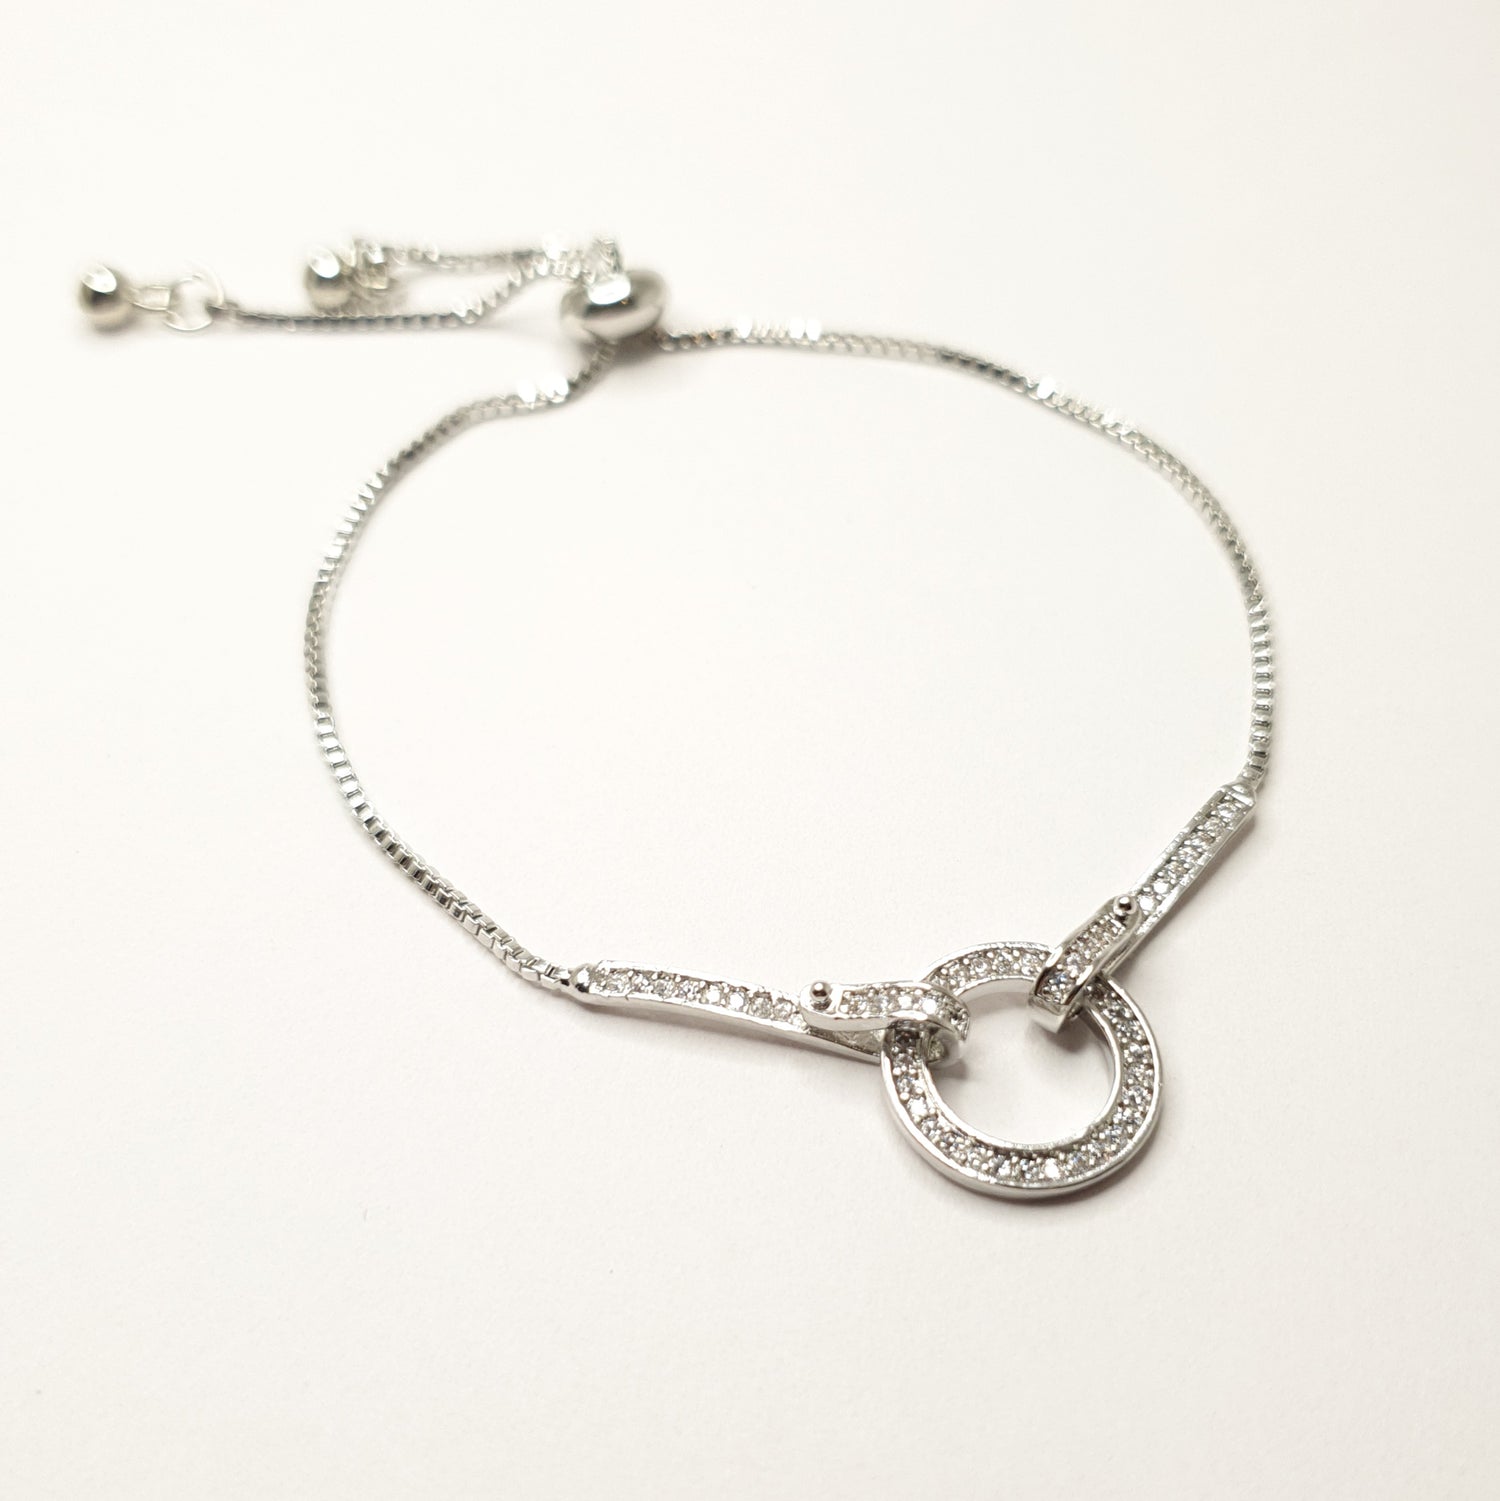 Silber rhodiniert Stainless Steel Armband Armspange Schmuck Fashion Accessoires Armband mit Anhänger Kreis Diamanten Zirkonia Zugverschluss Damenarmband